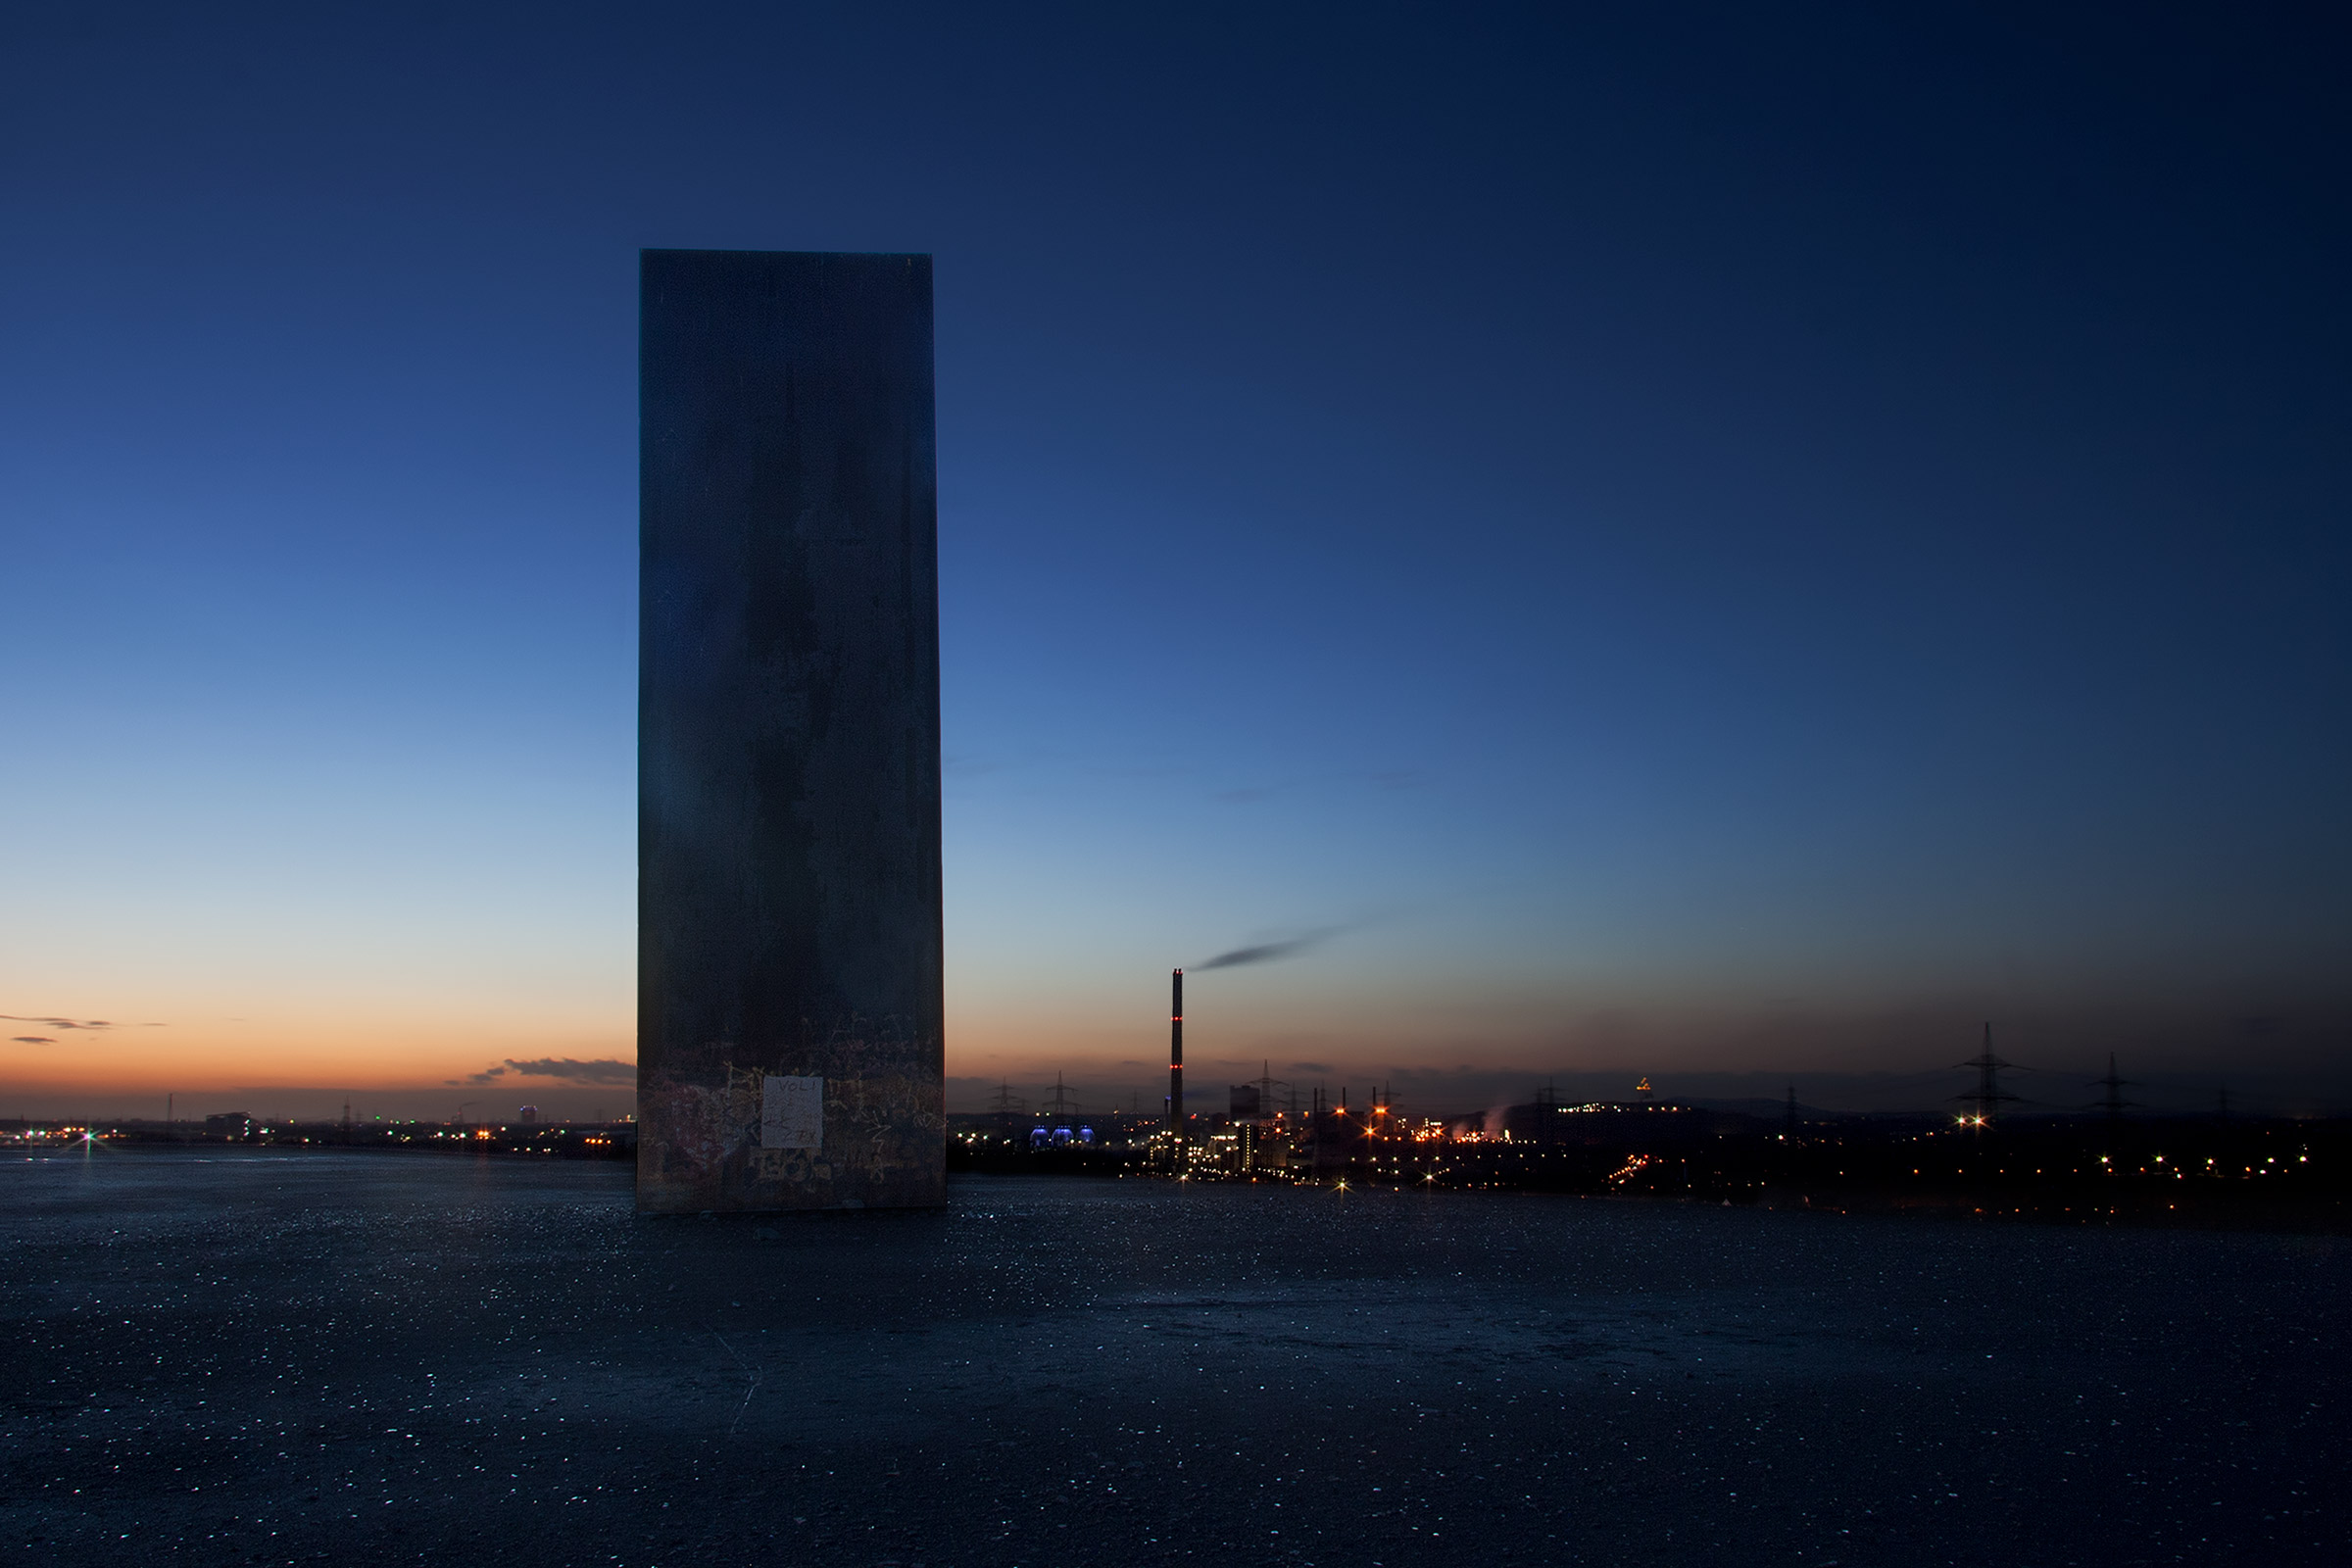 Bramme für das Ruhrgebiet (Richard Serra)